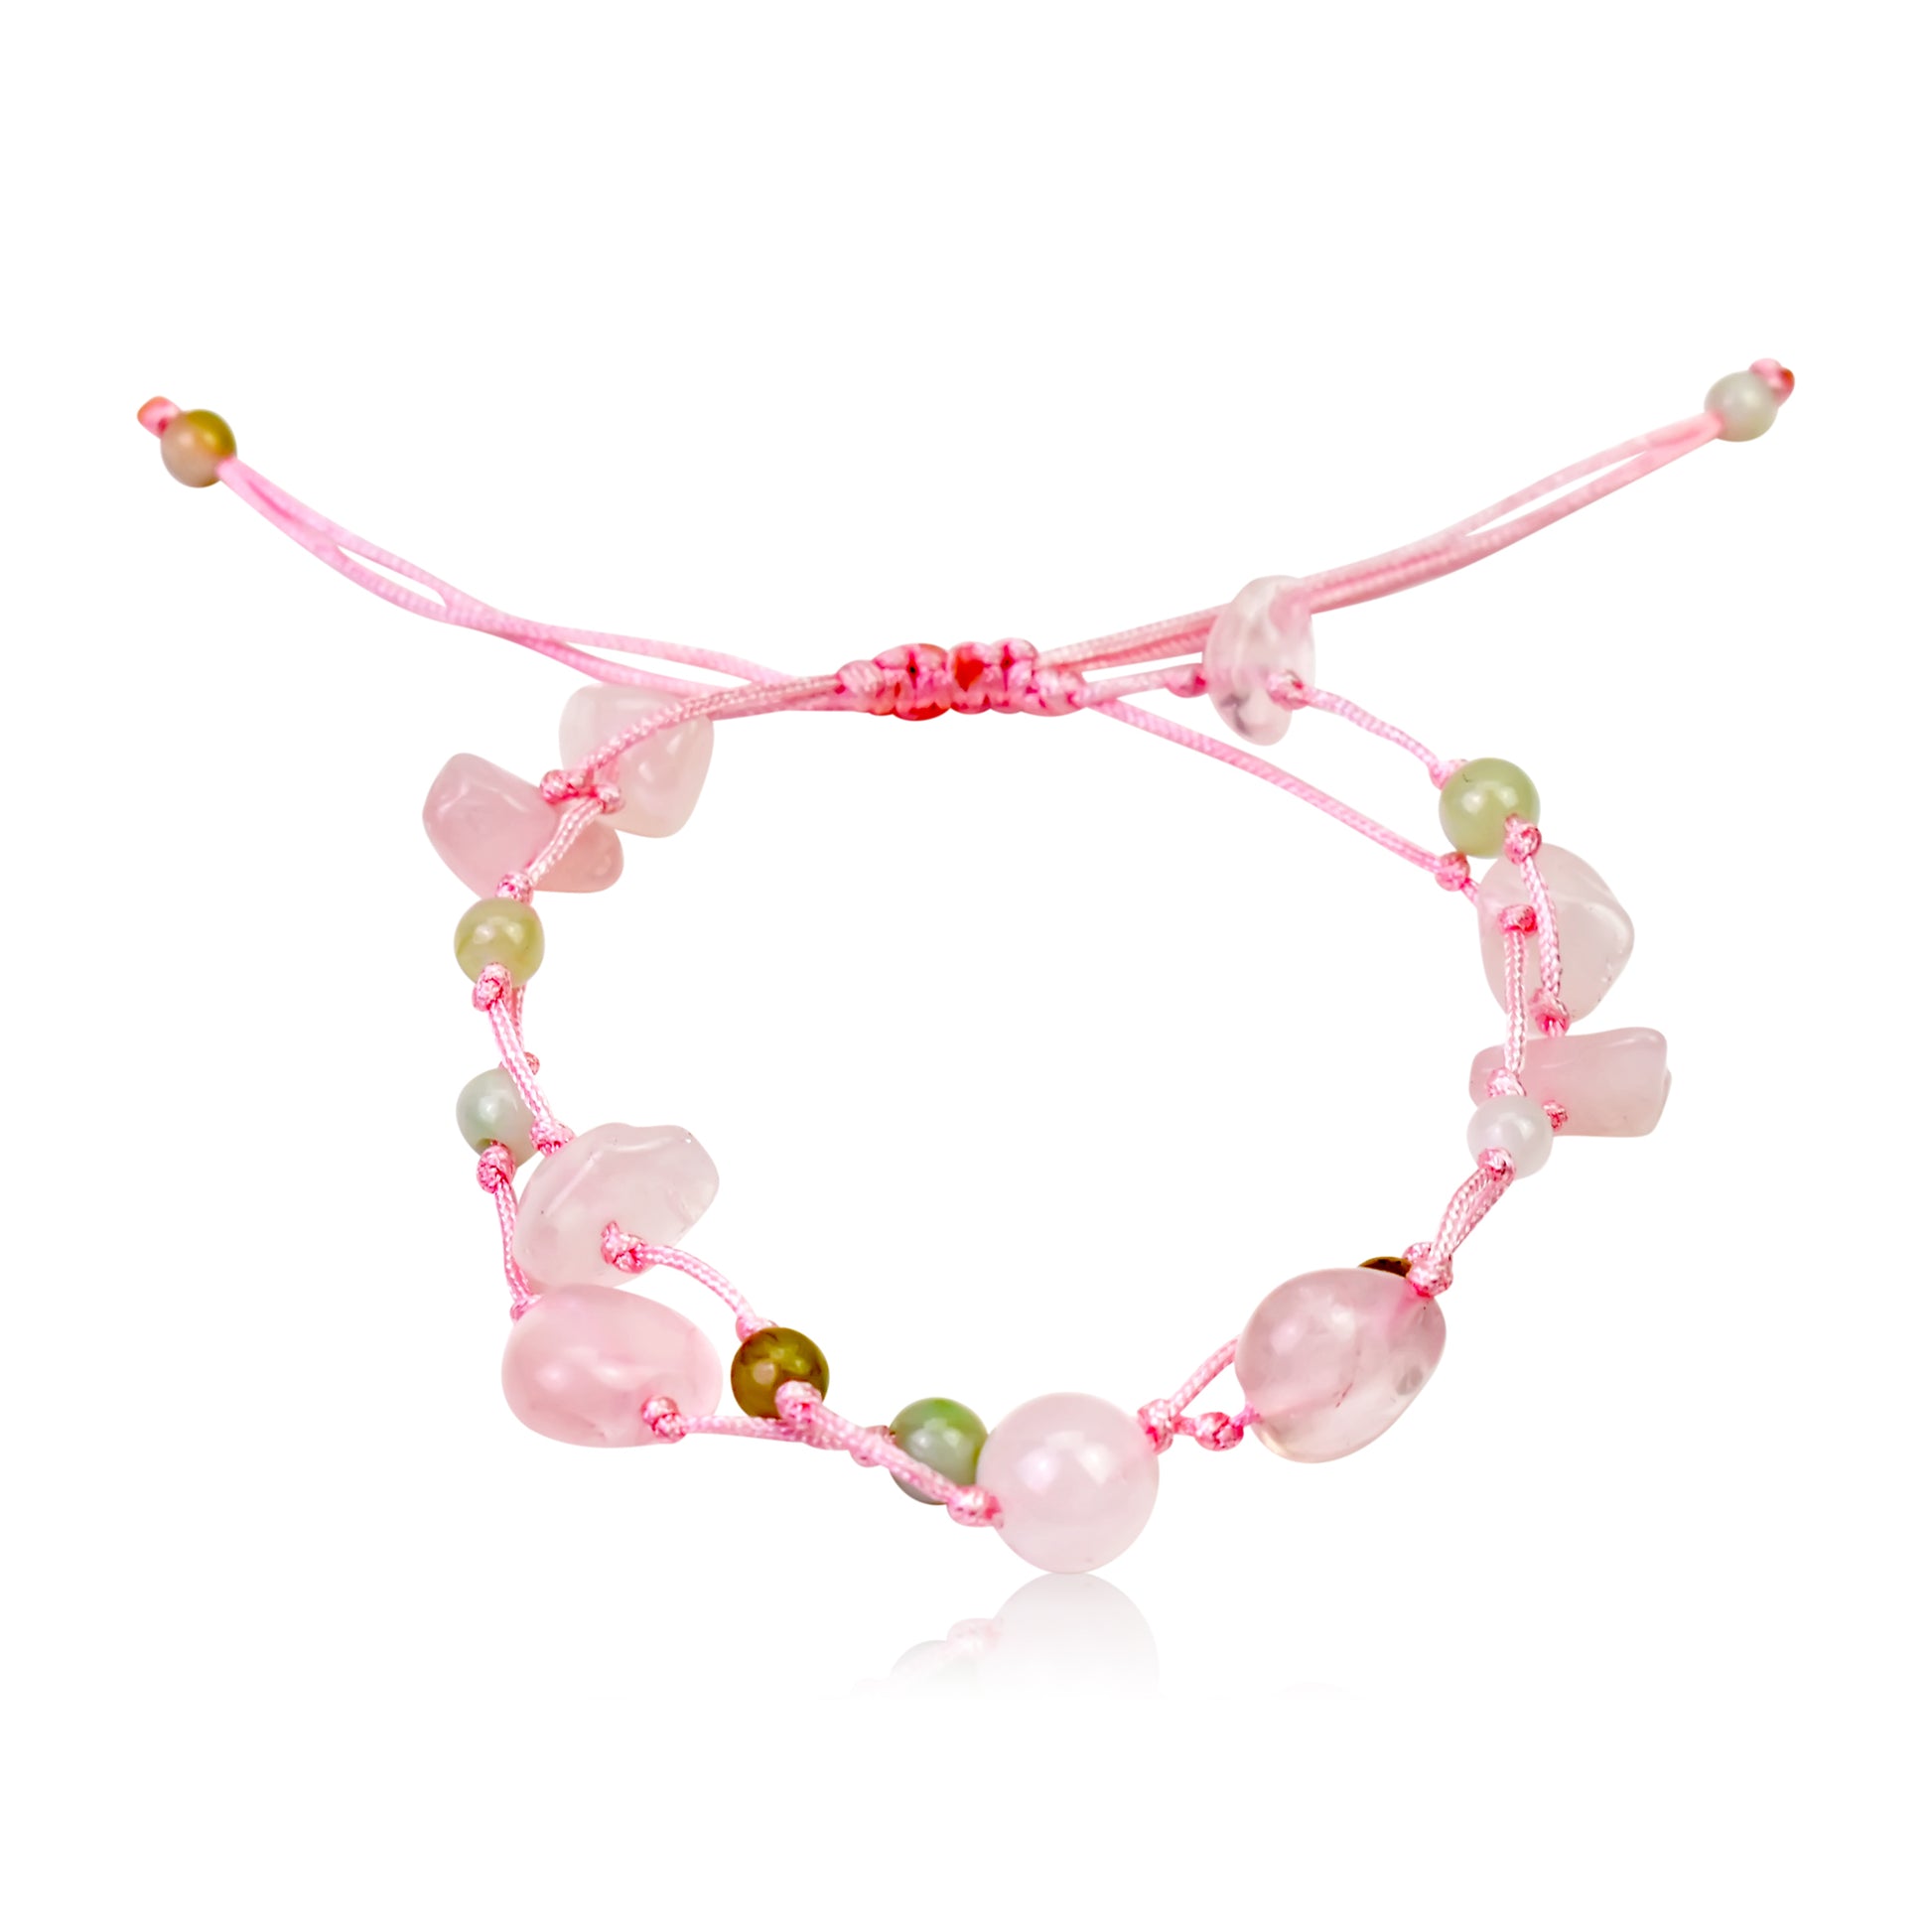 Sparkle in Style with a Rose Quartz Handmade Gemstones Bracelet